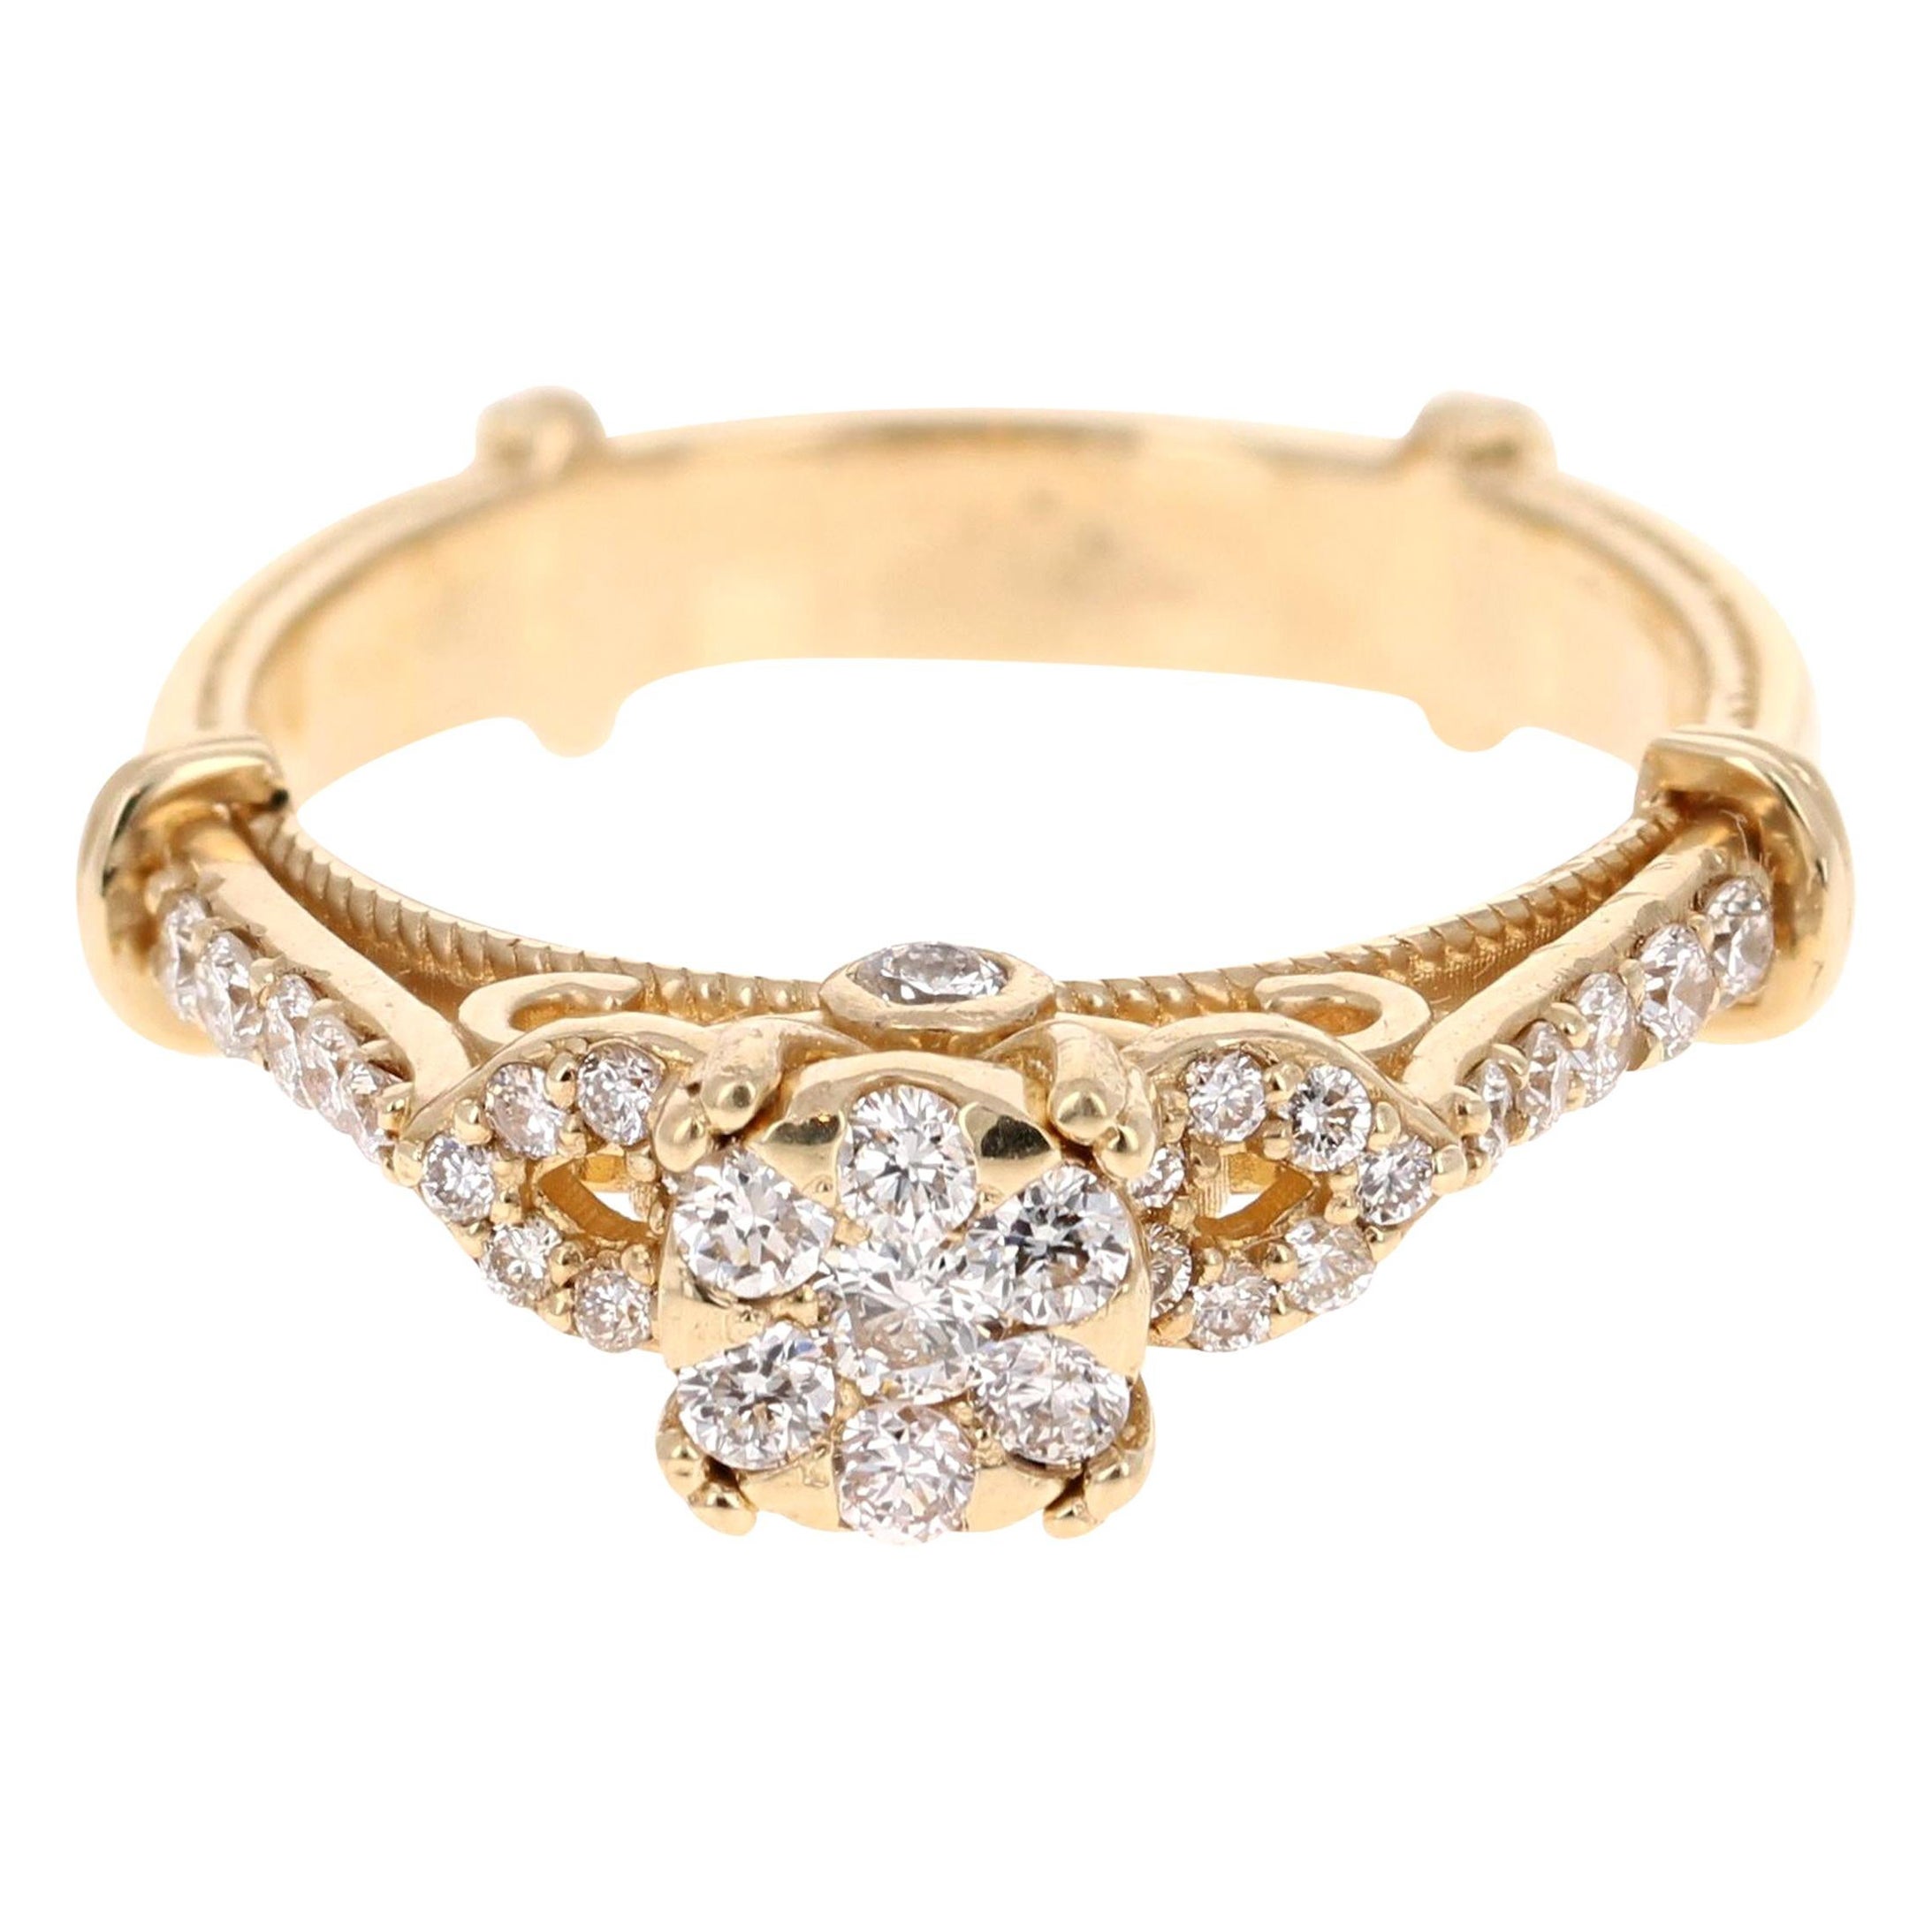 0.50 Carat Diamond Yellow Gold Engagement Ring